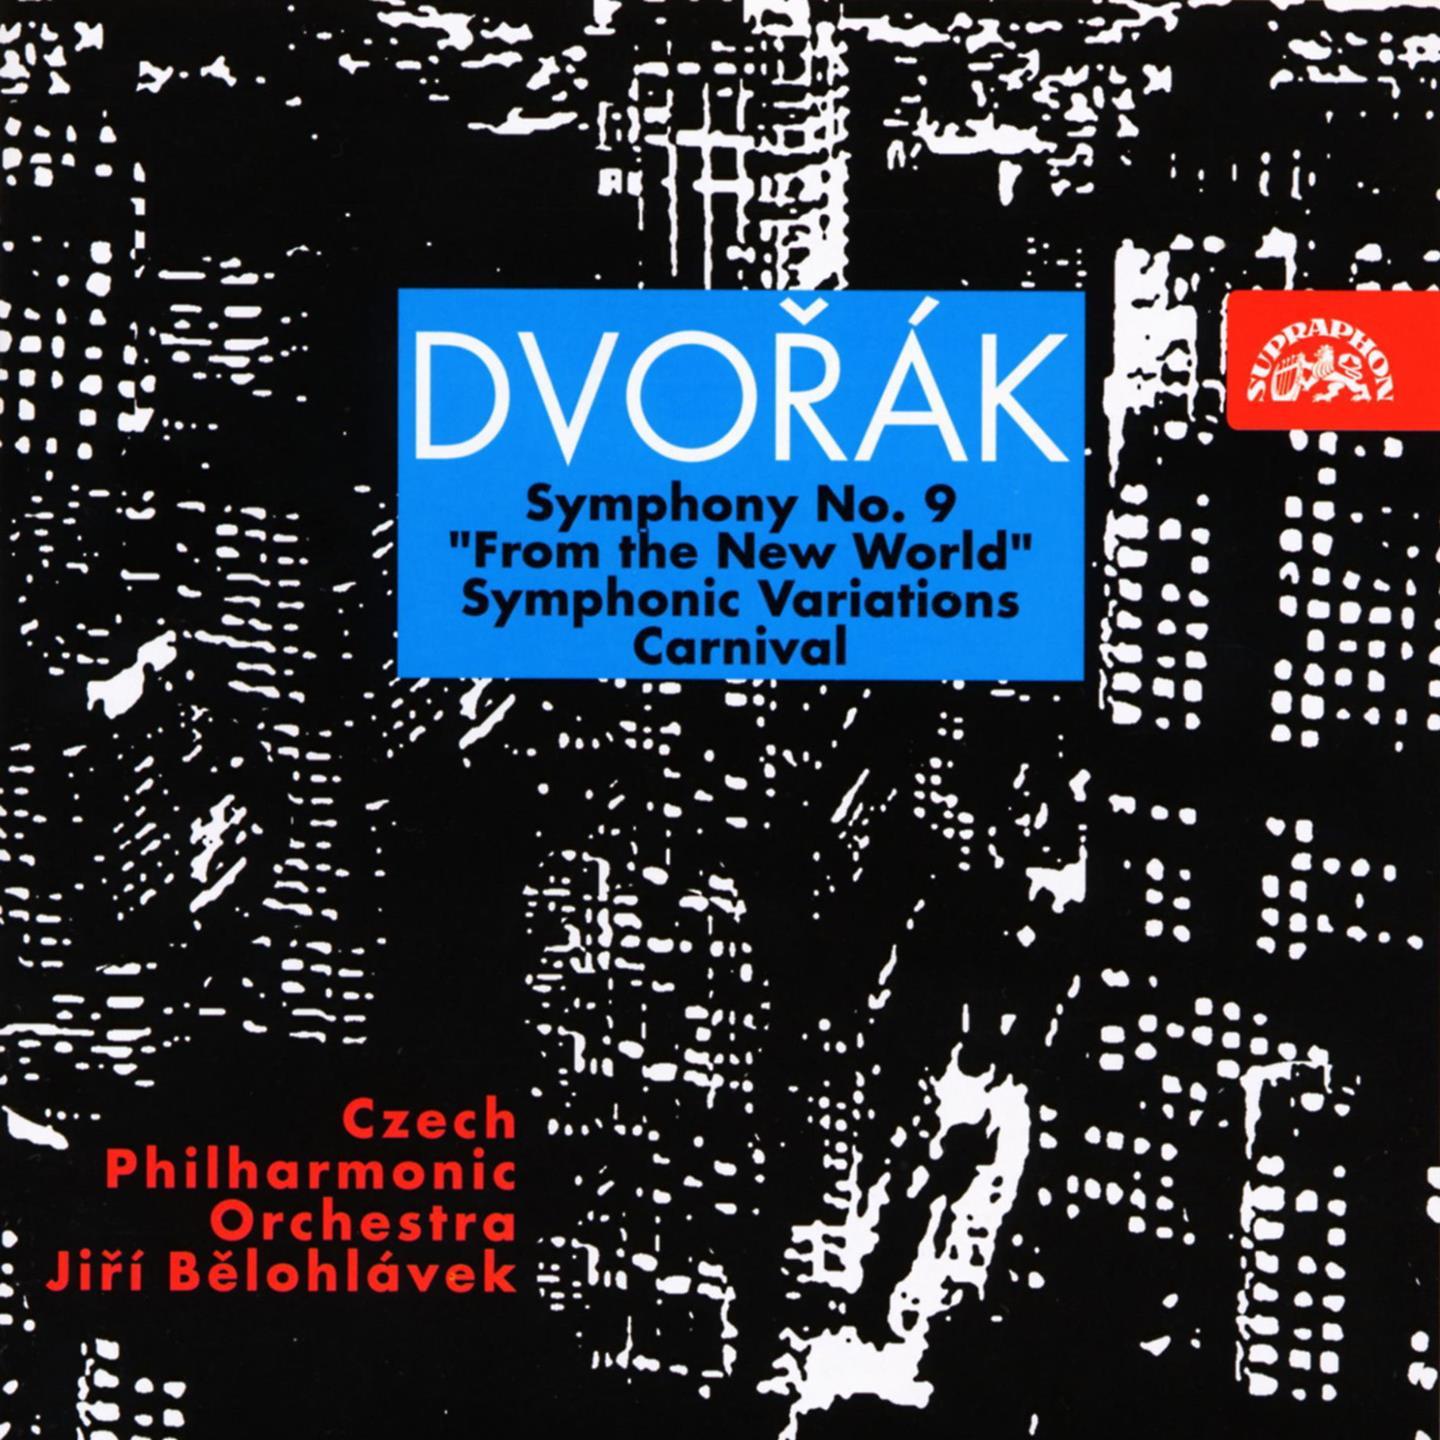 Dvoa k: Symphony No. 9 " From the New World", Carnival, Symphonic Variations